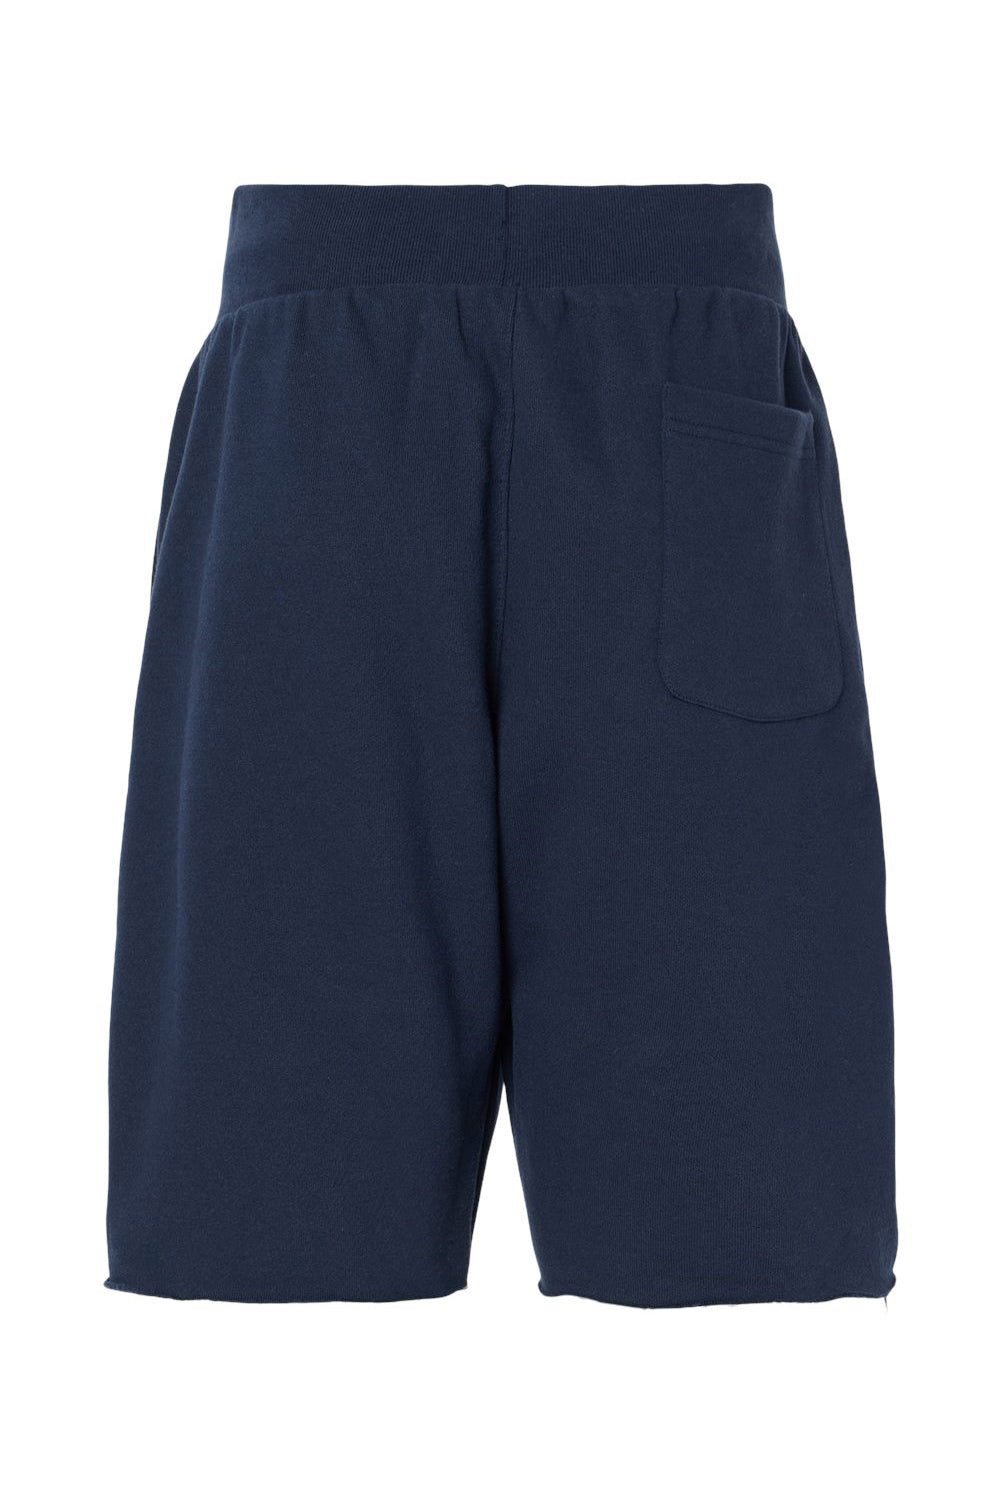 Champion RW26 Mens Reverse Weave Shorts w/ Pockets Navy Blue Flat Back